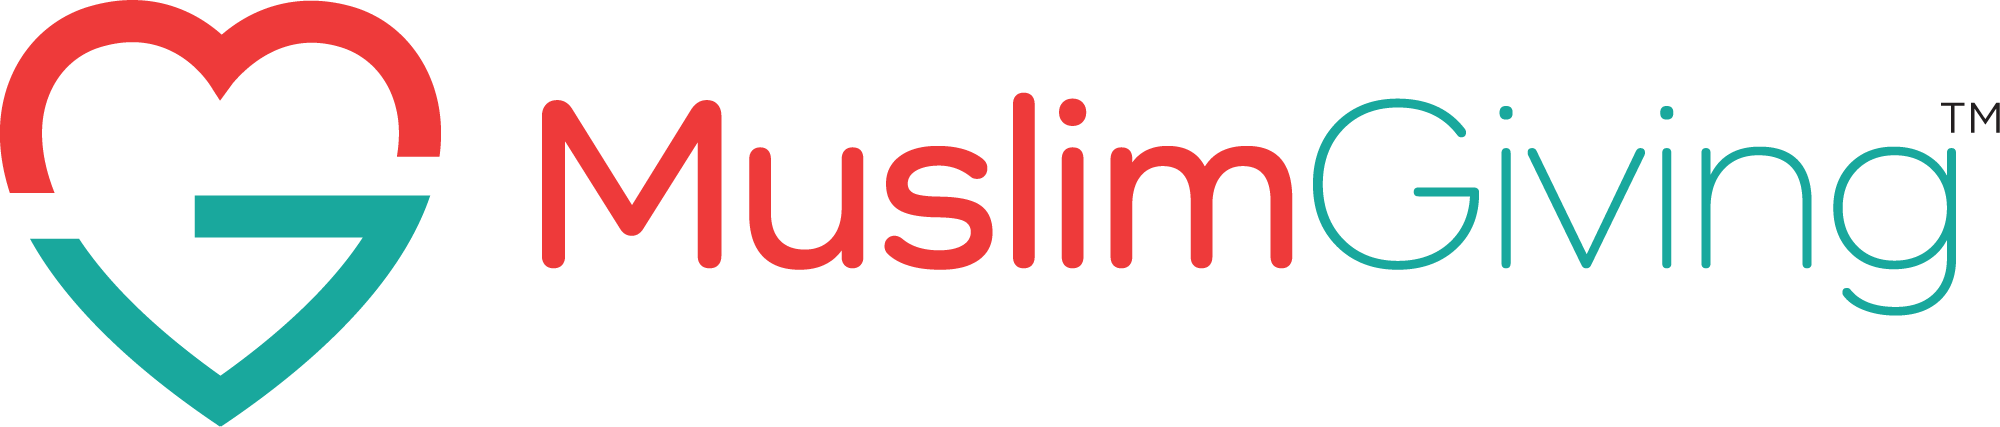 Muslim Giving Logo